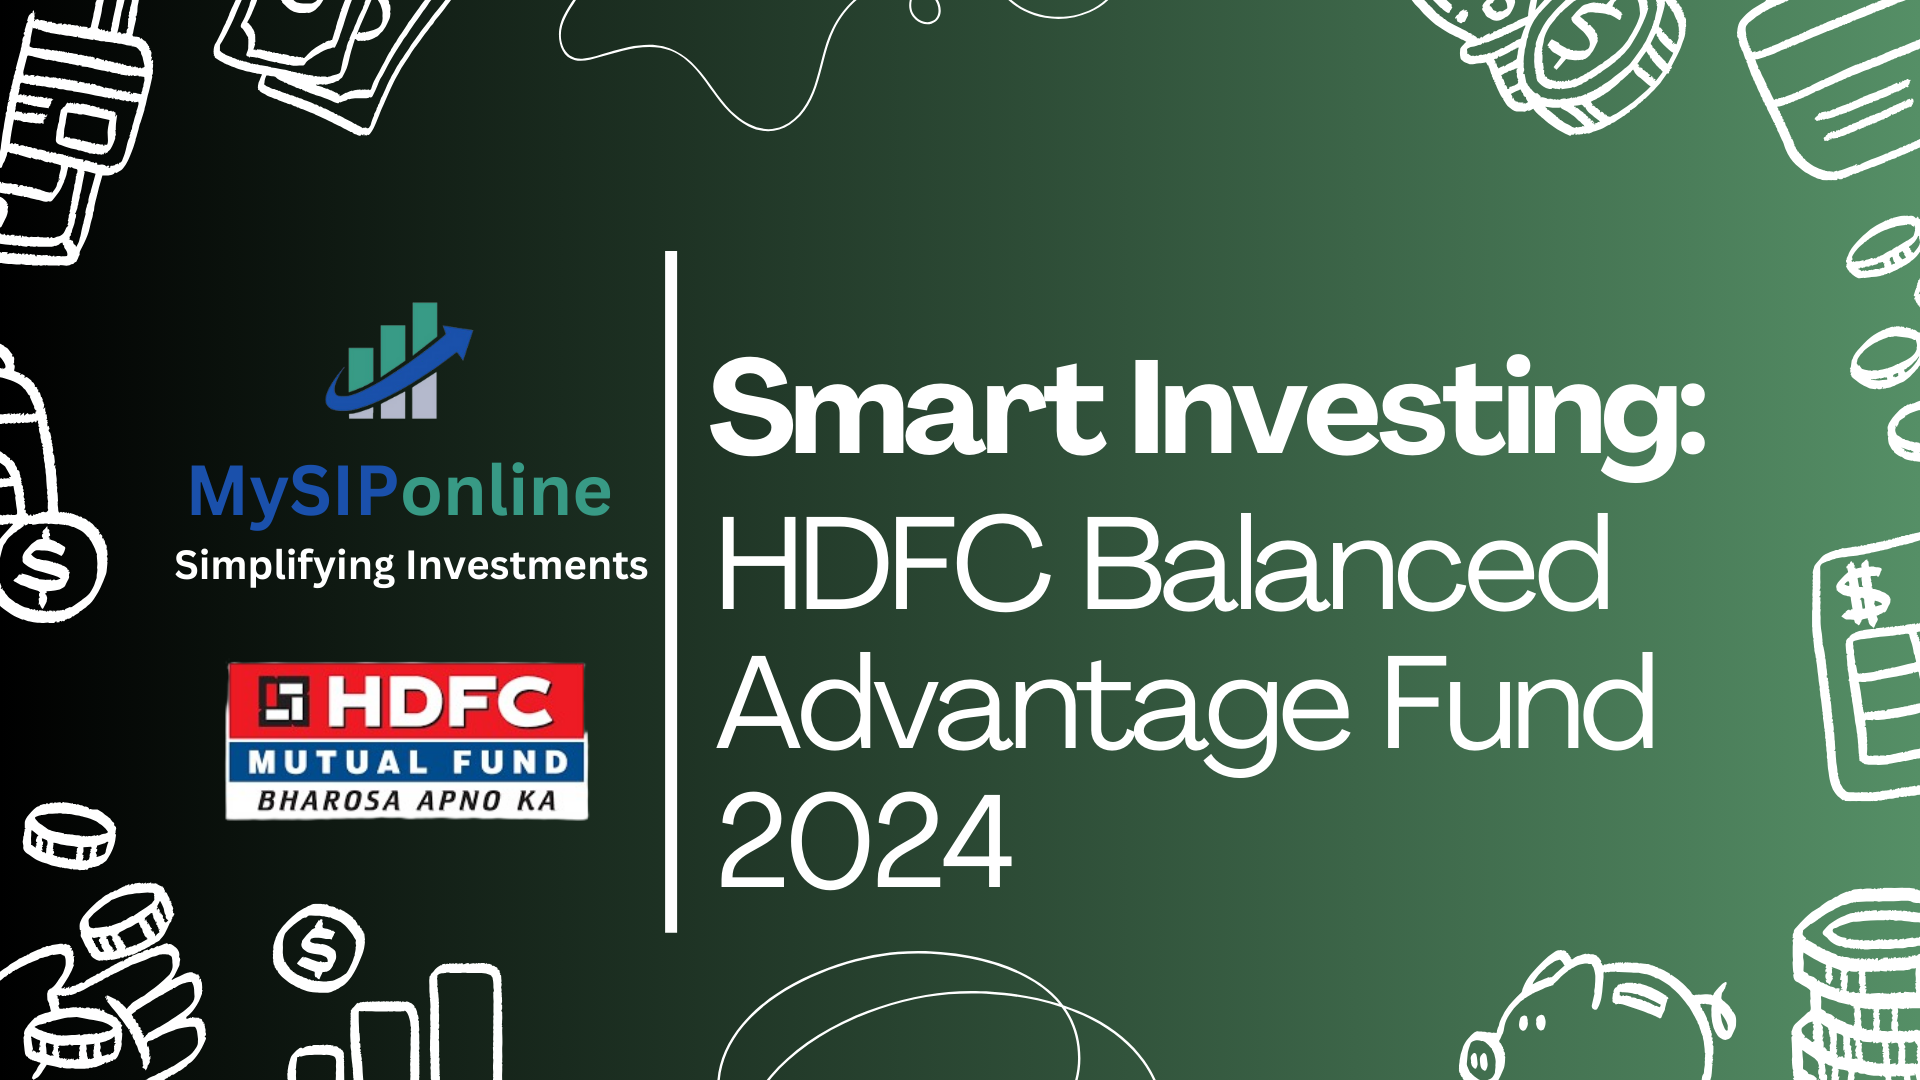 Smart Investing: HDFC Balanced Advantage Fund 2024